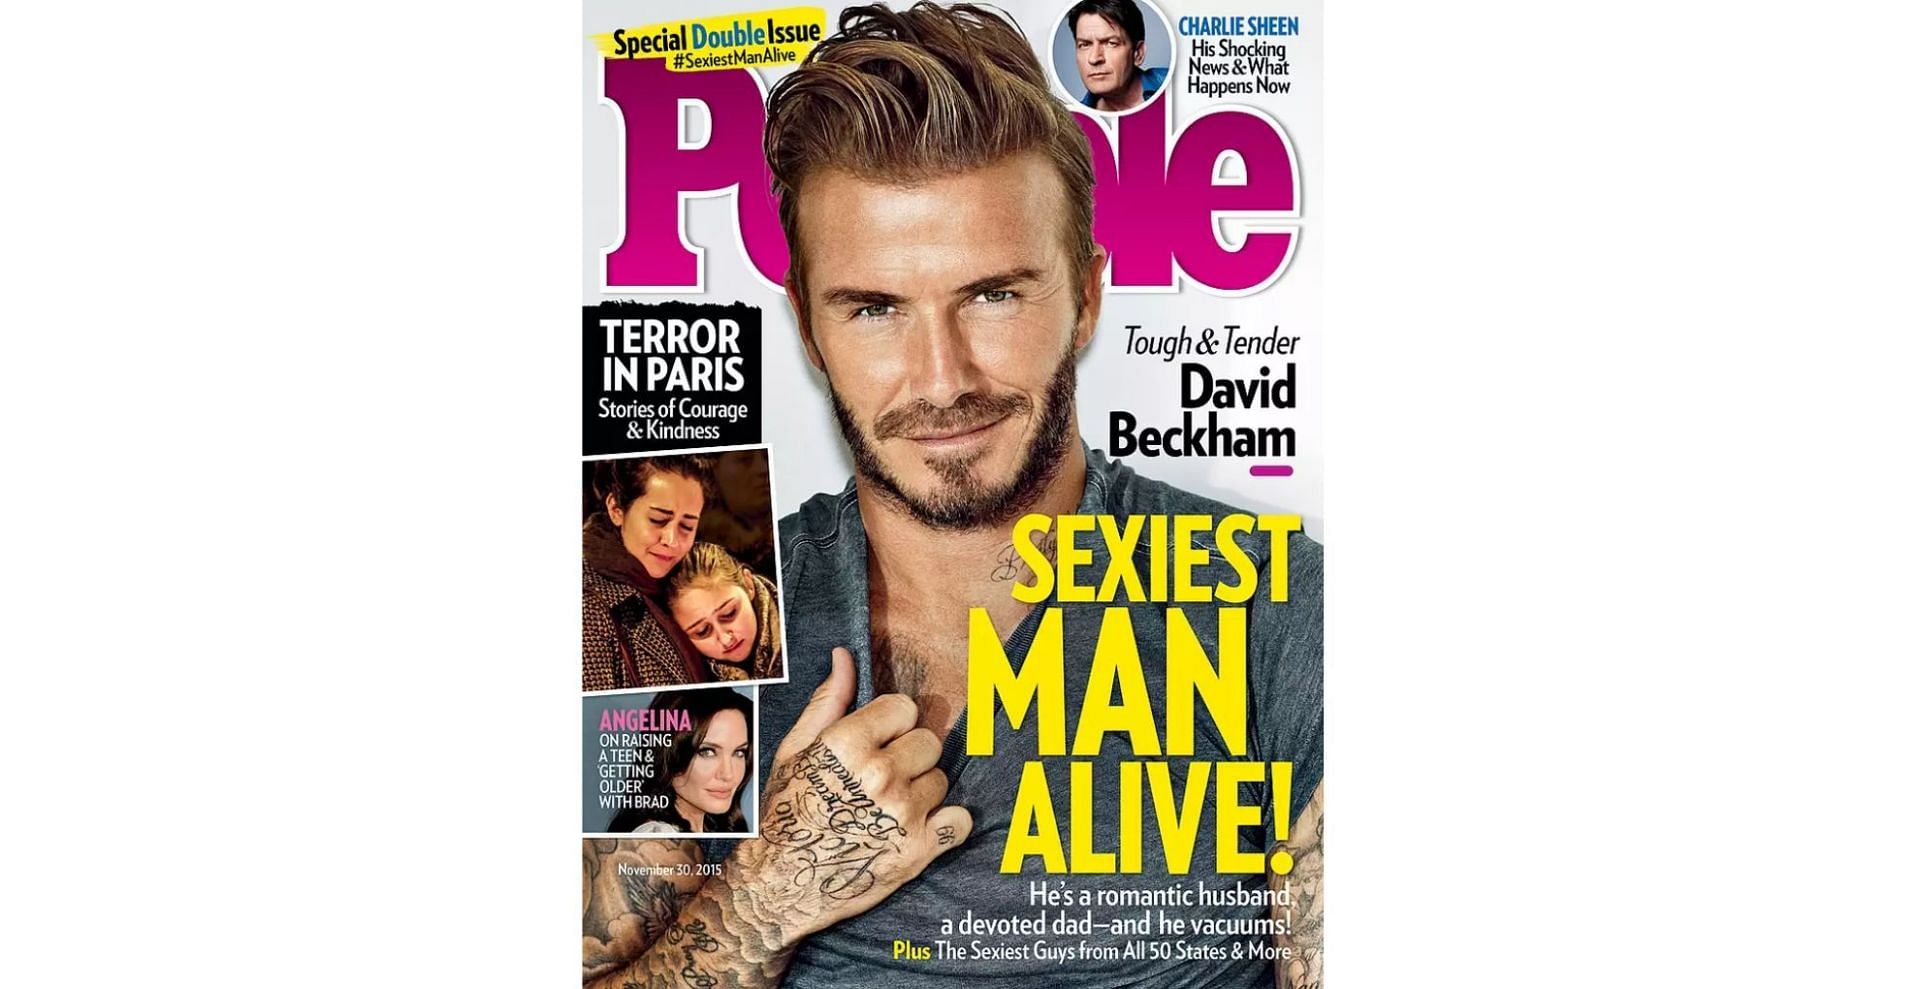 People magazine cover (Image via People.com)